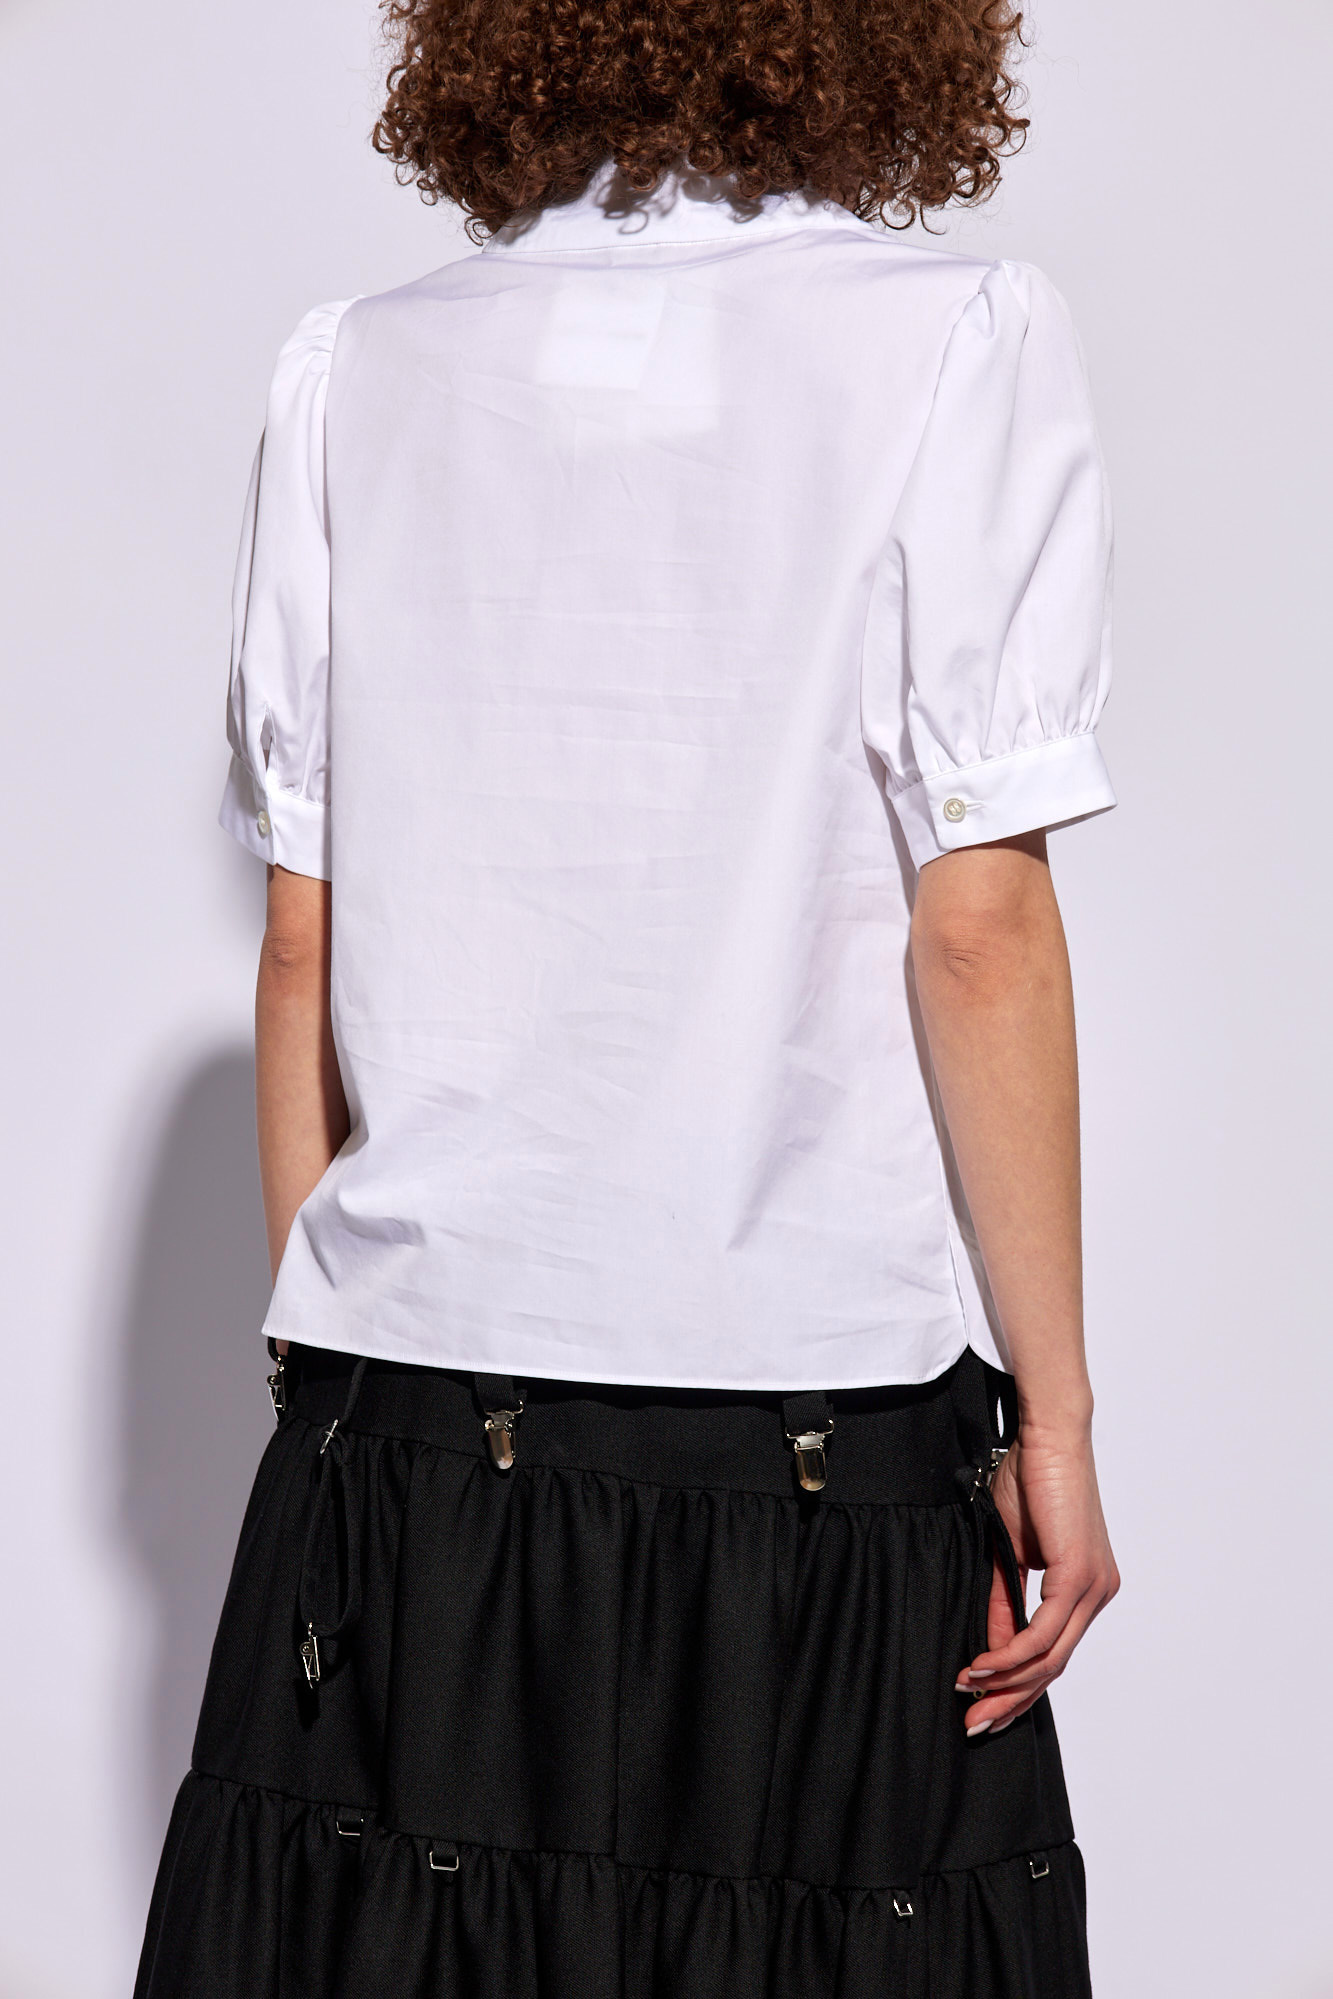 Comme des Garçons Noir Kei Ninomiya Shirt with short sleeves 